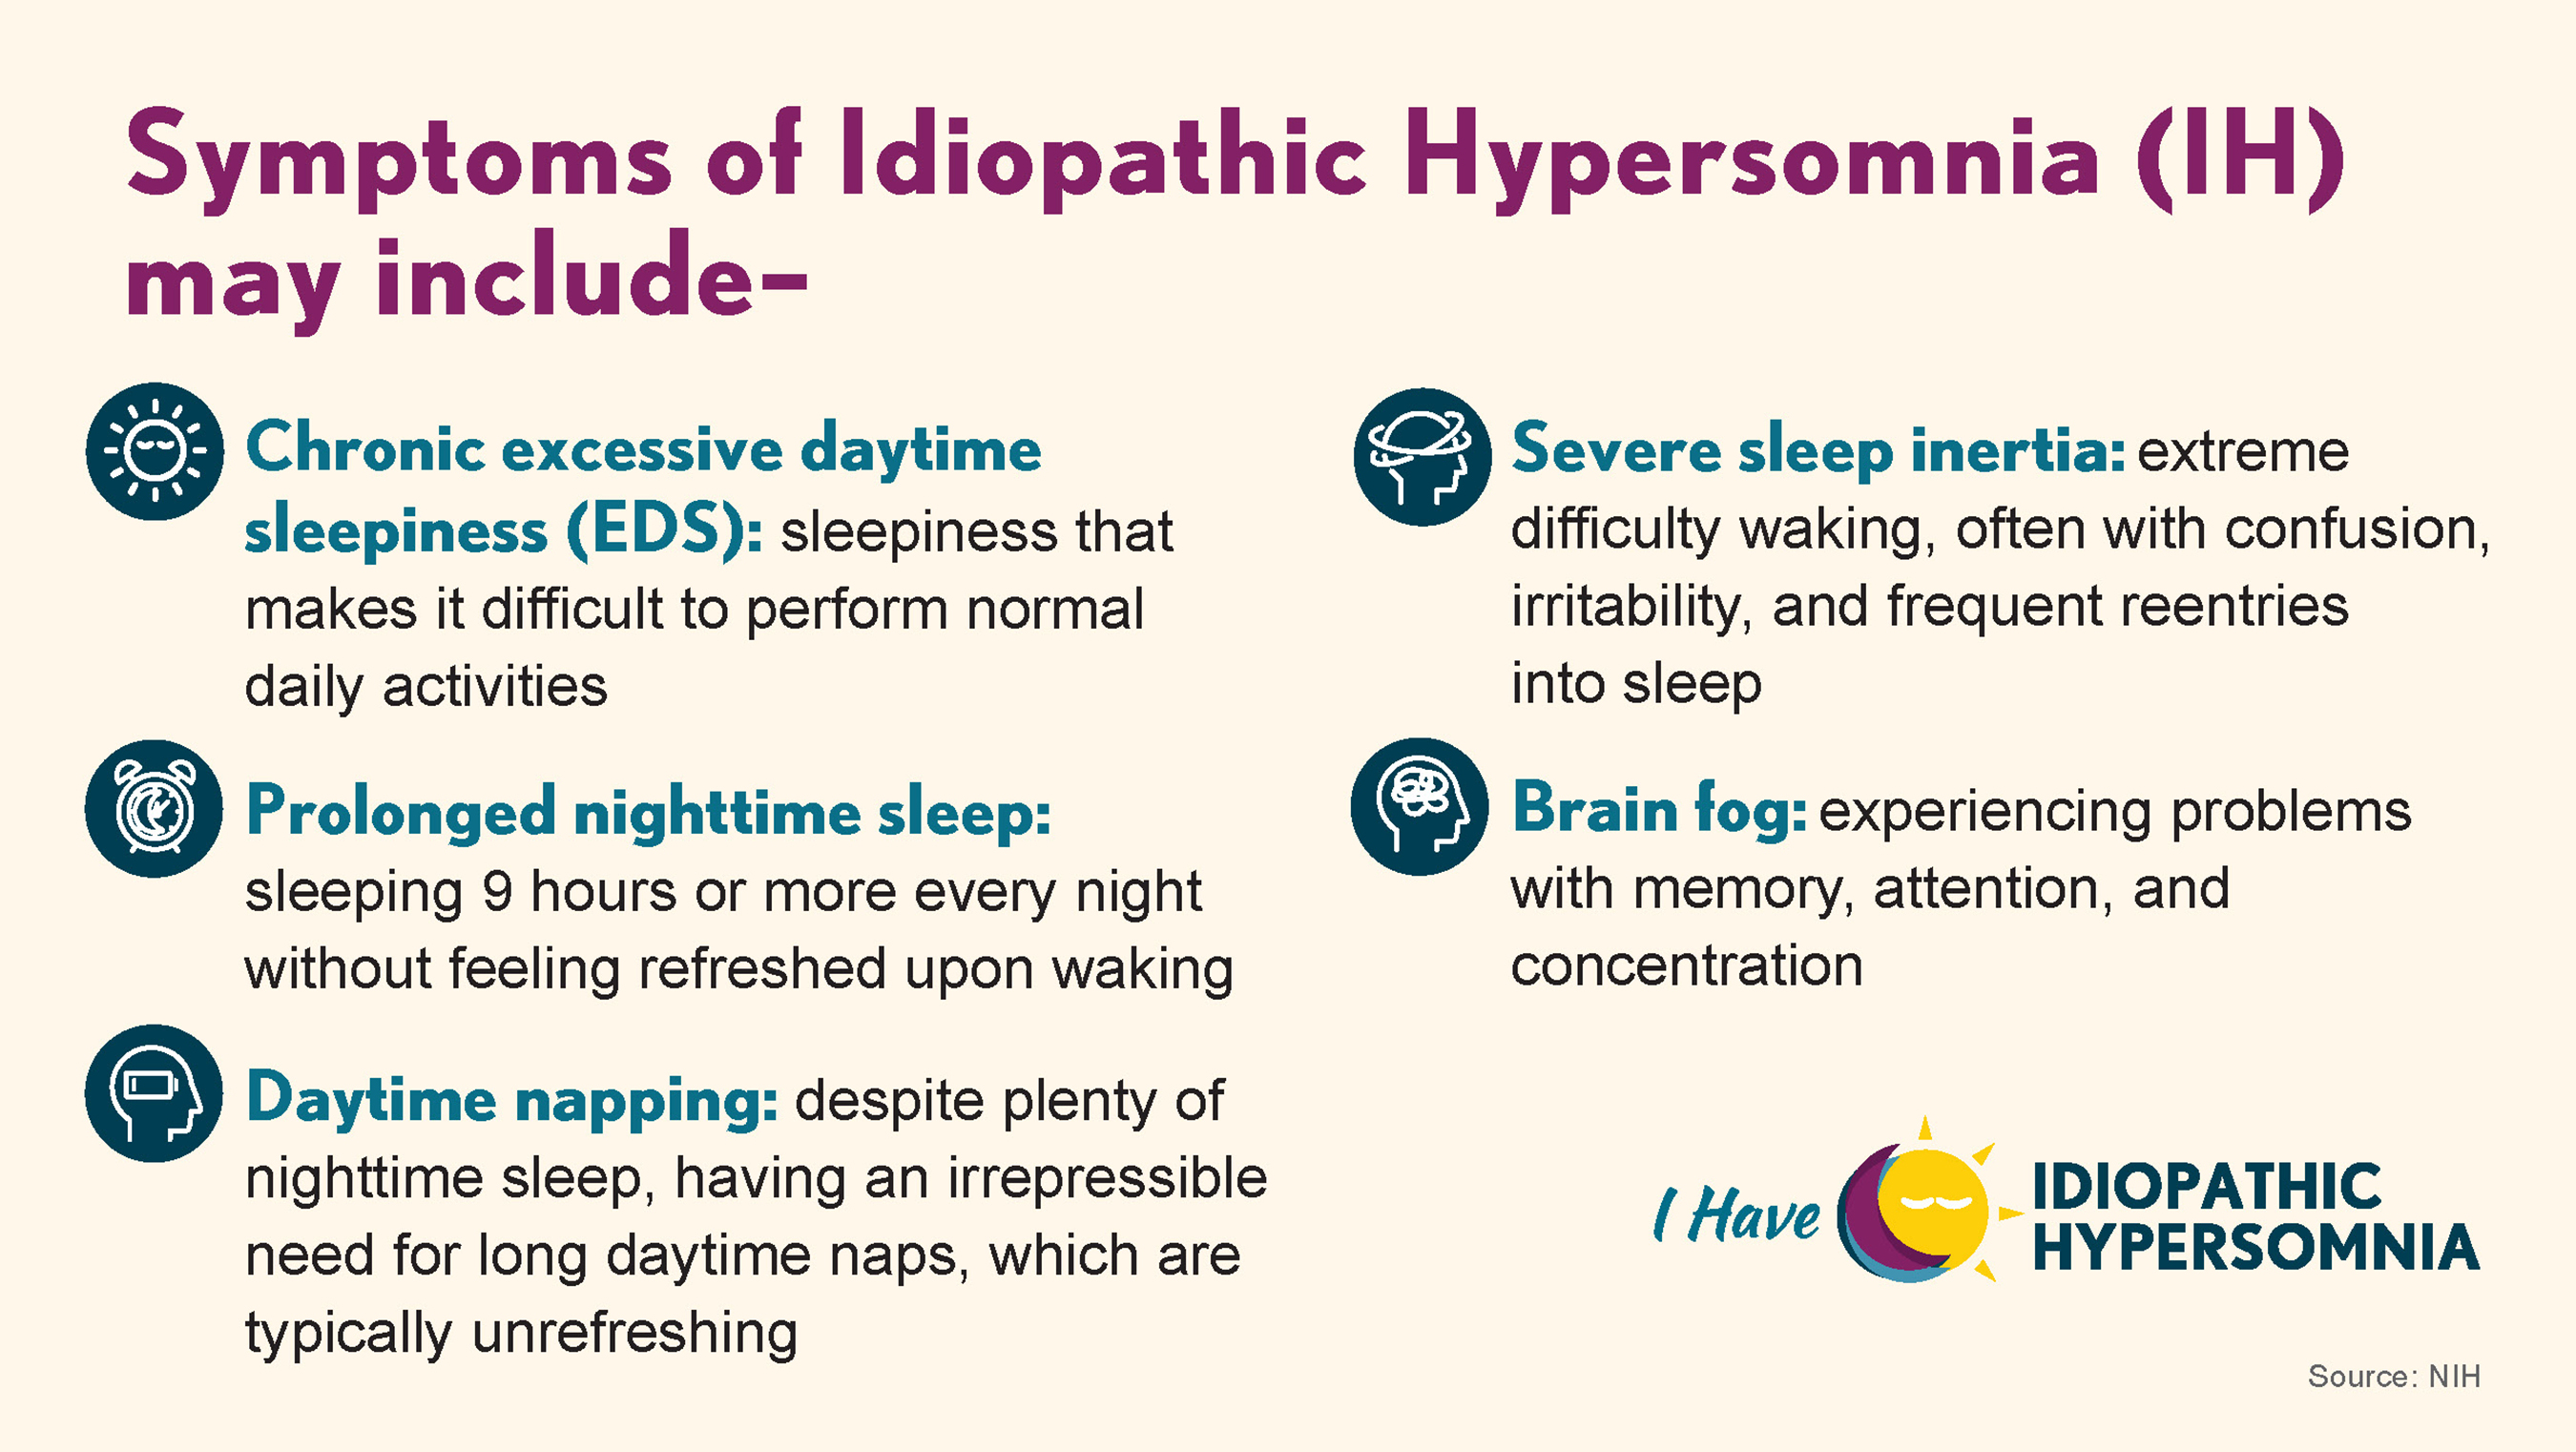 Symptoms of IH